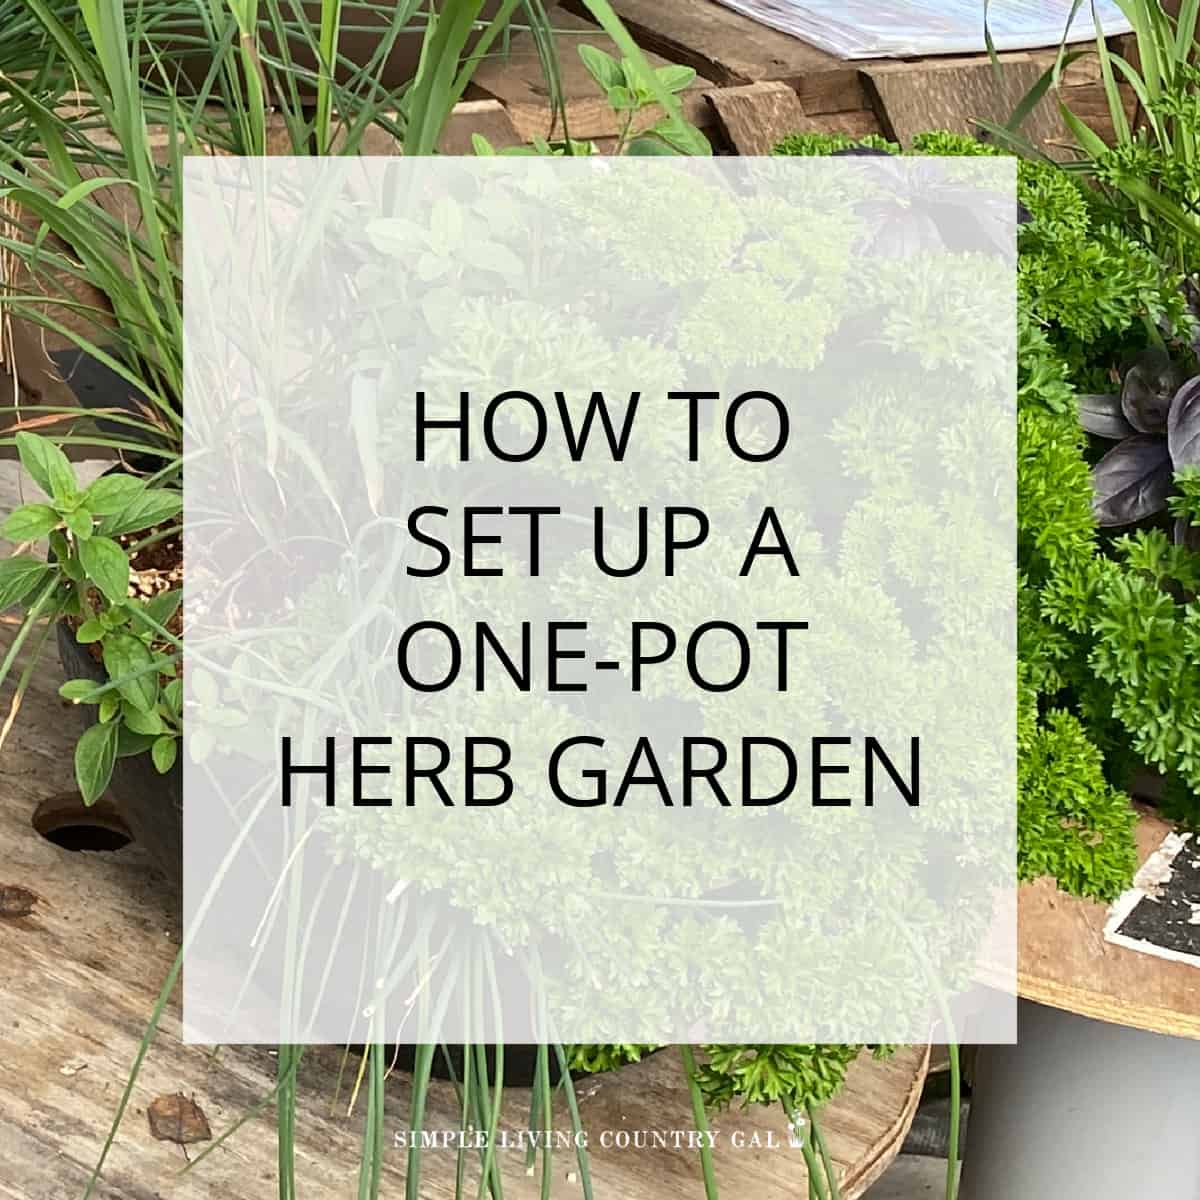 0ne pot herb garden